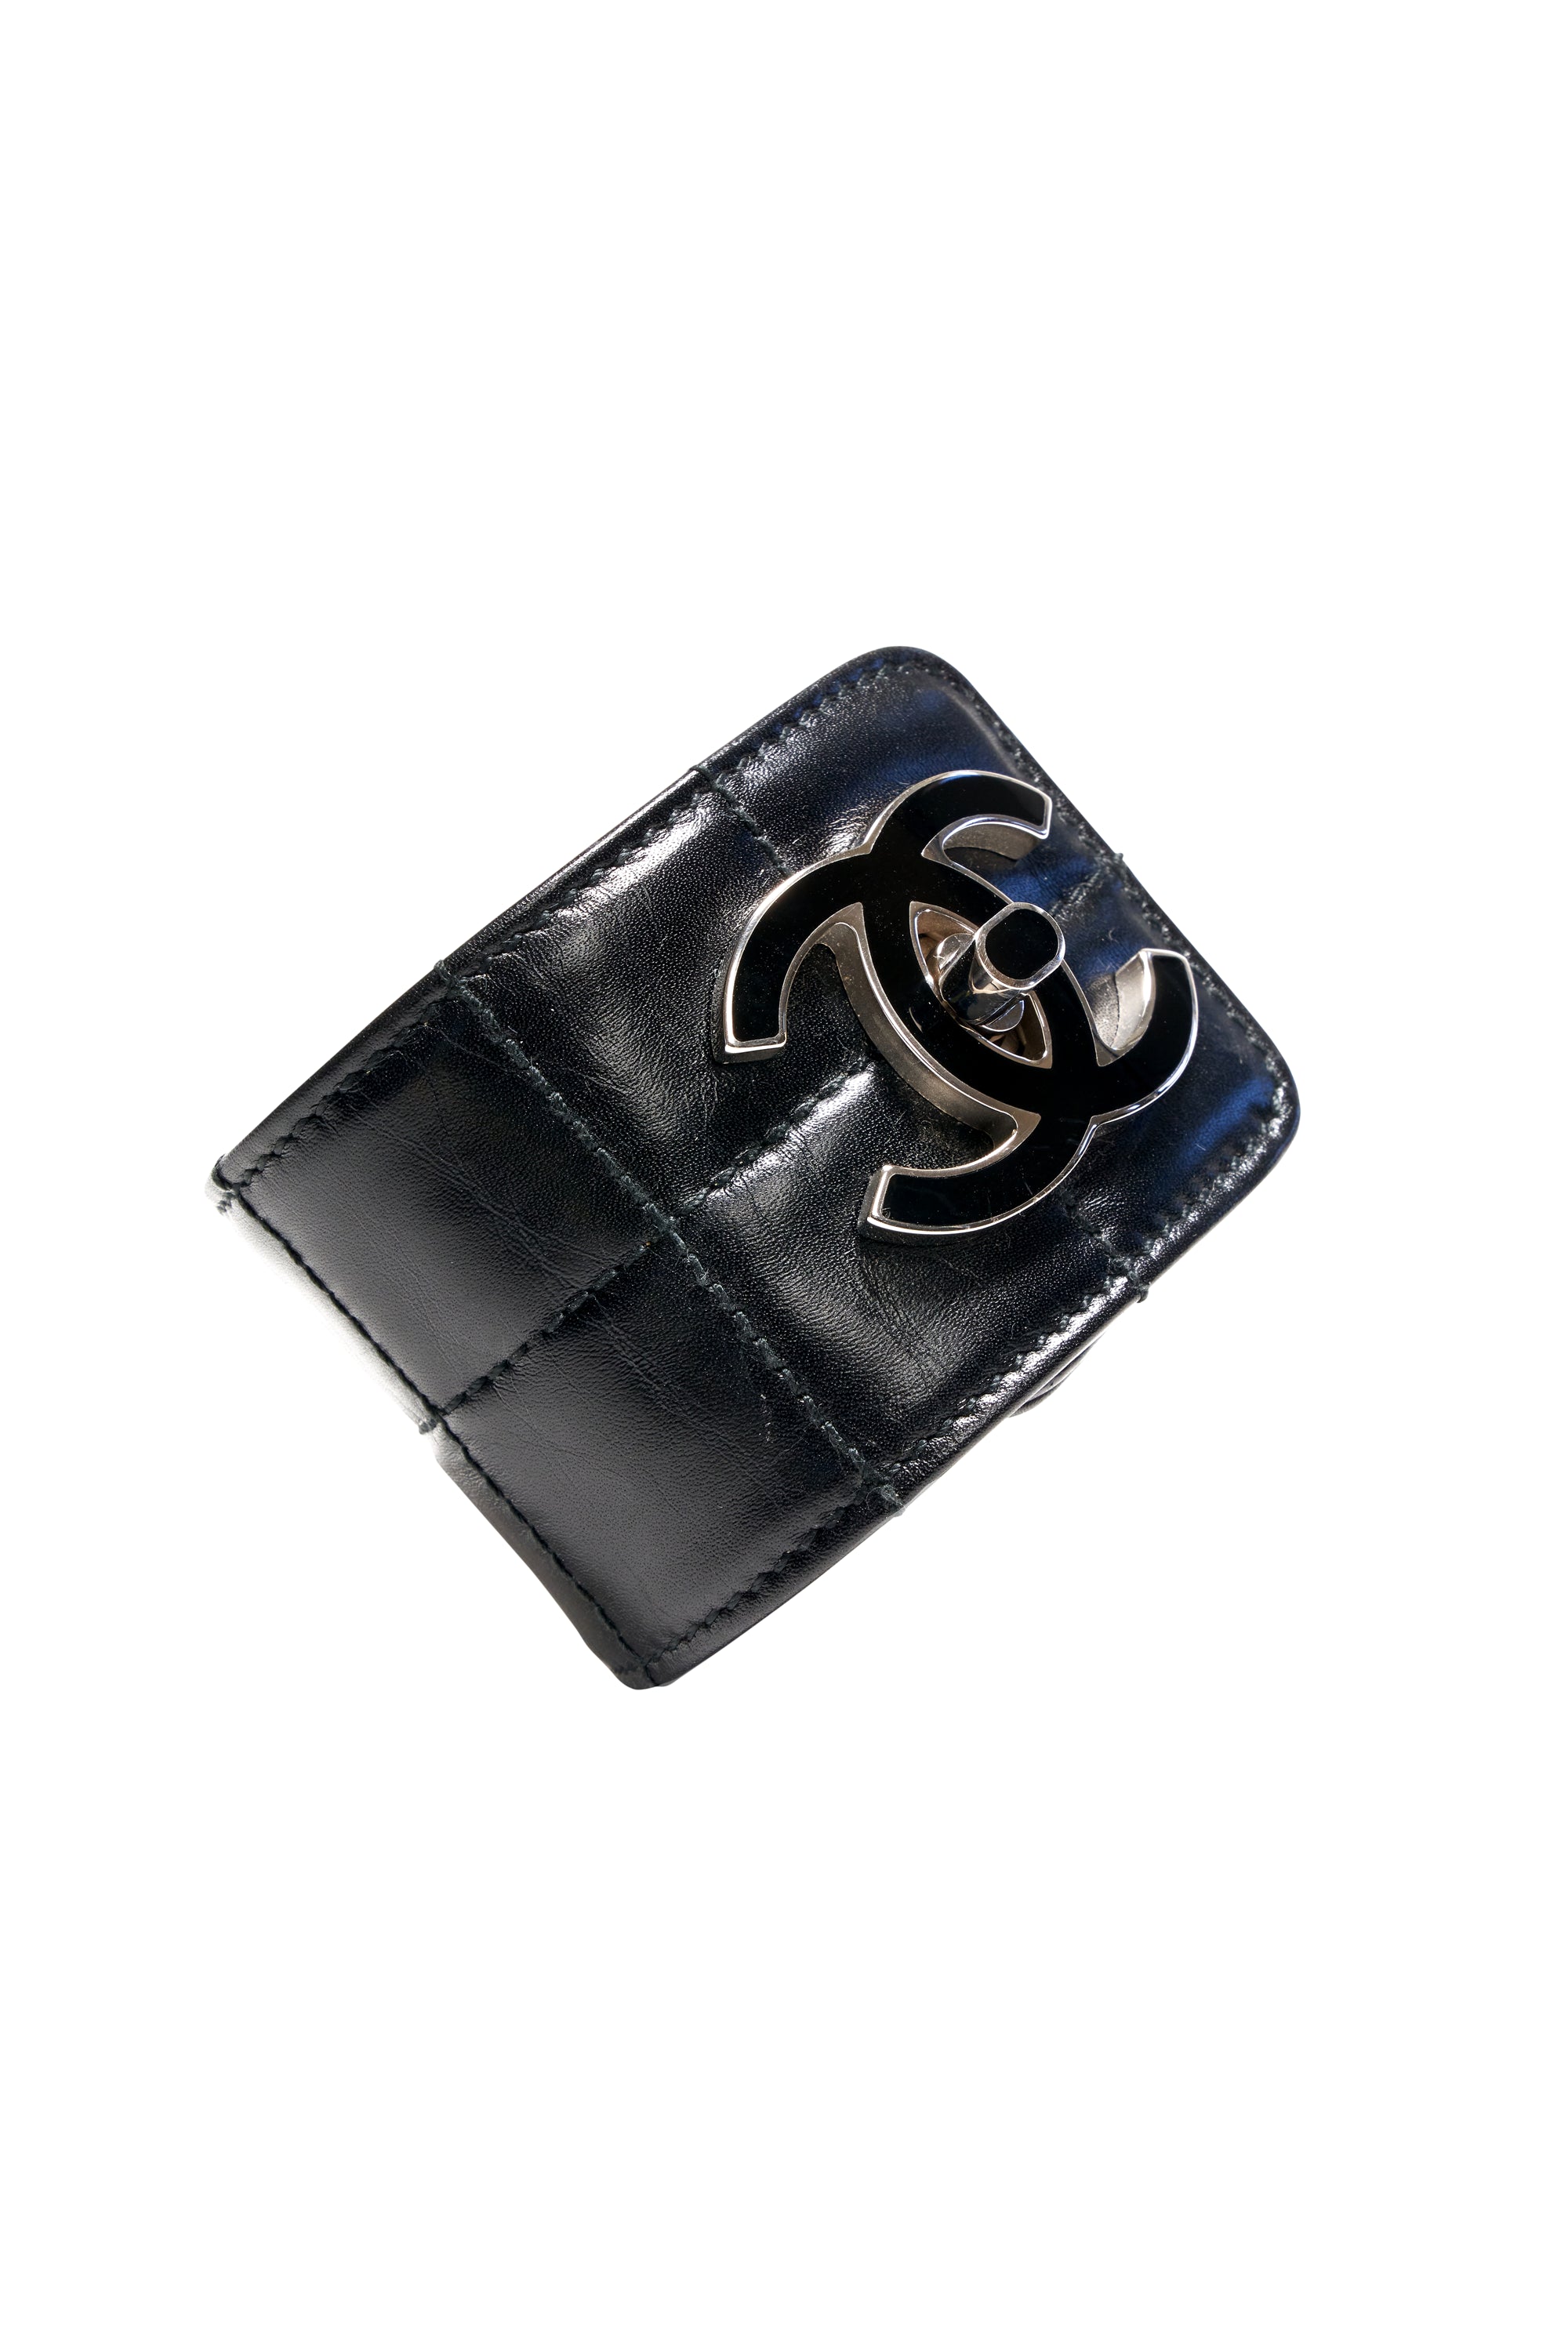 Chanel Vintage Black Napa Leather Cuff With Enamel CC 2002P